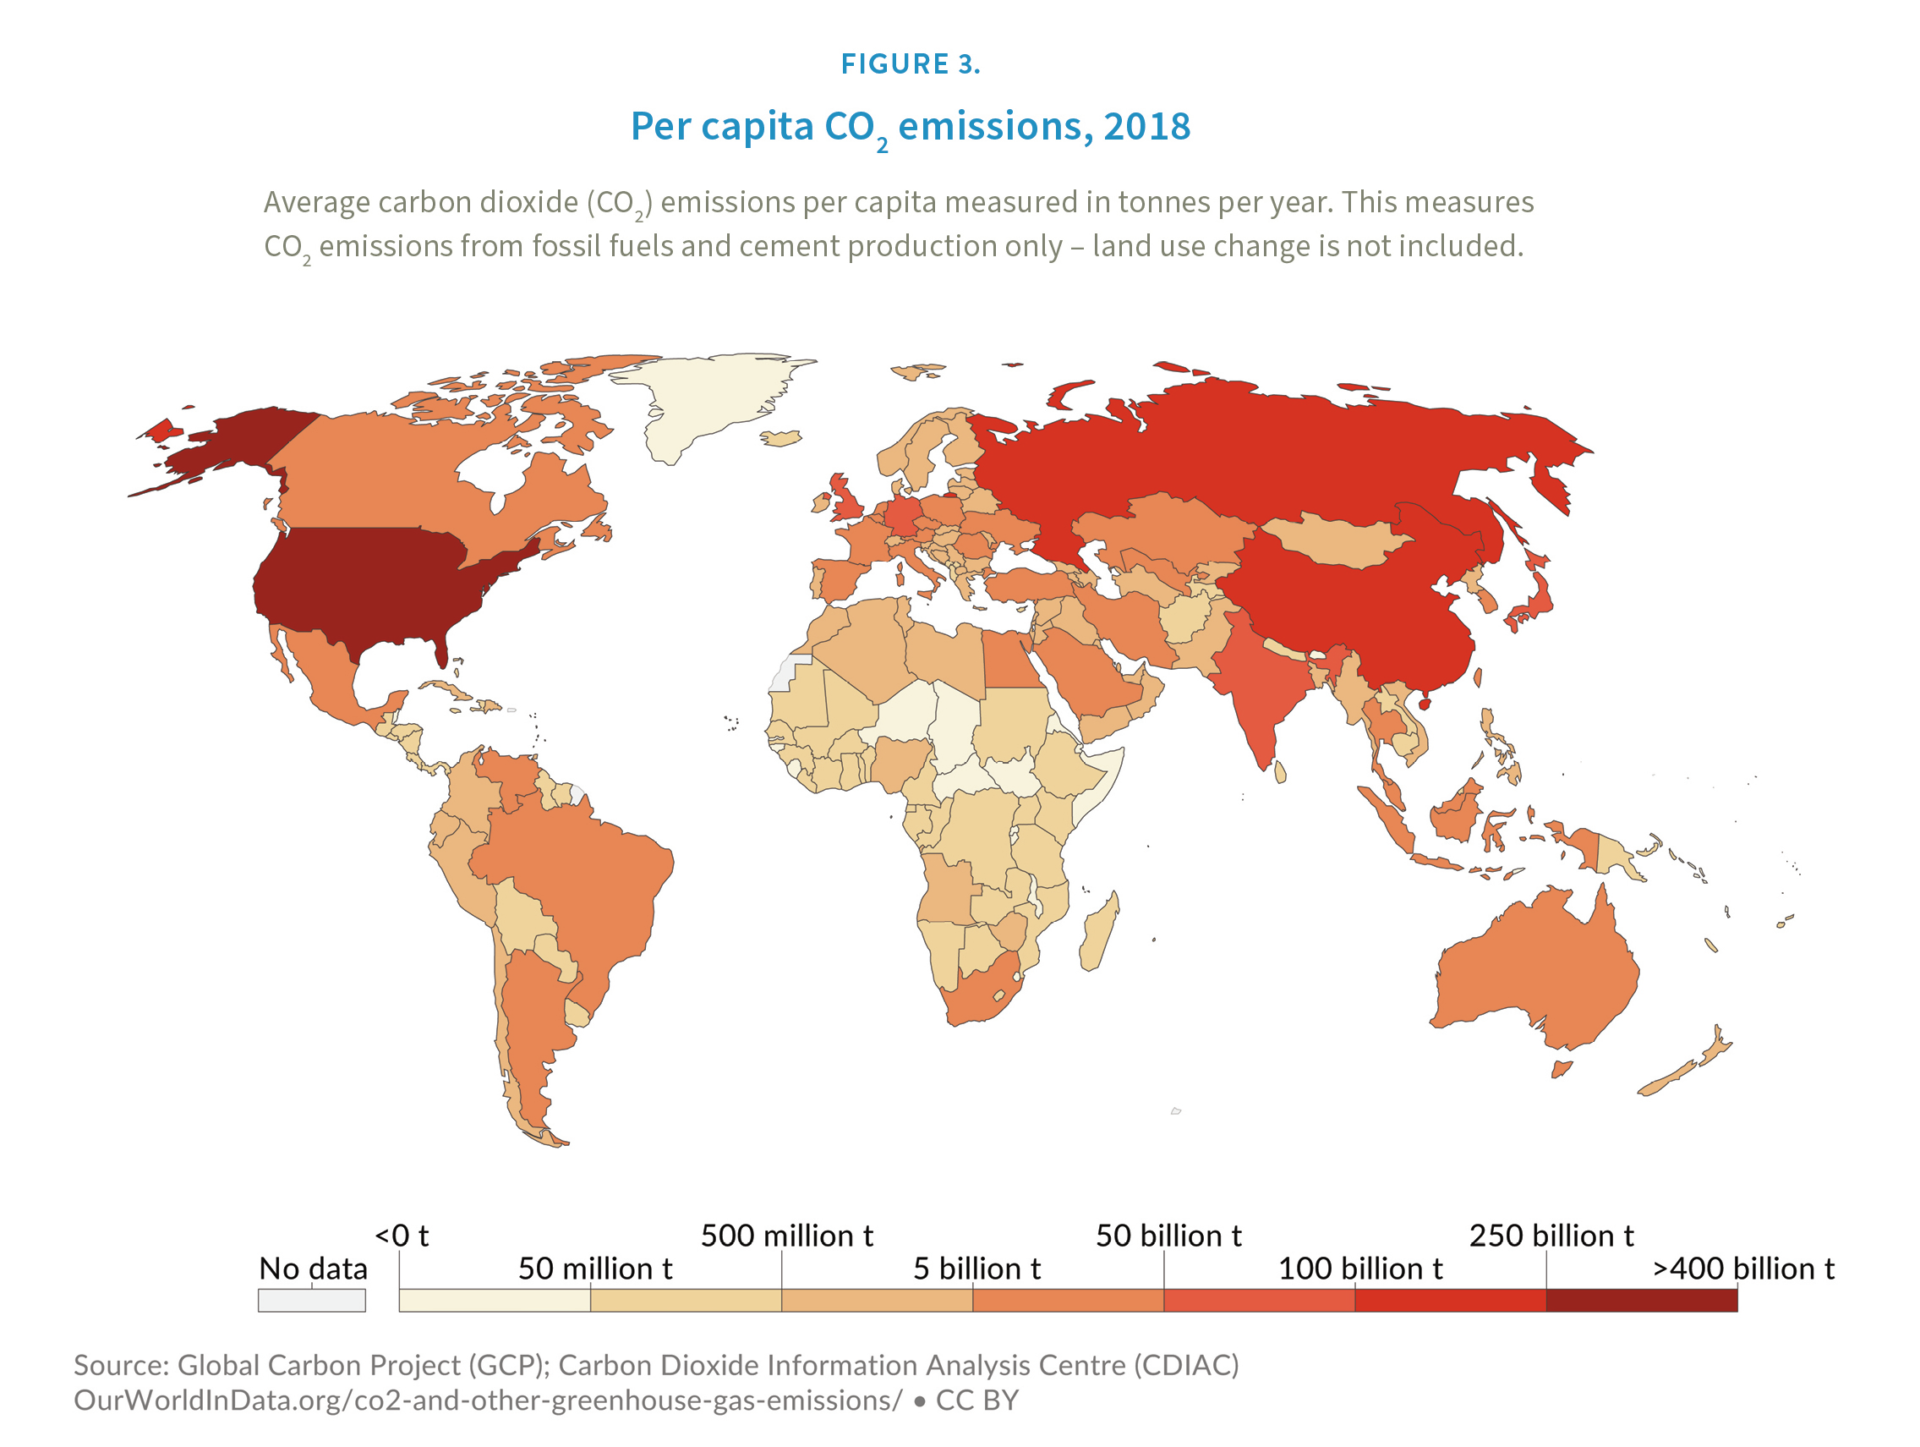 Per Capita Co2 emissions, 2018